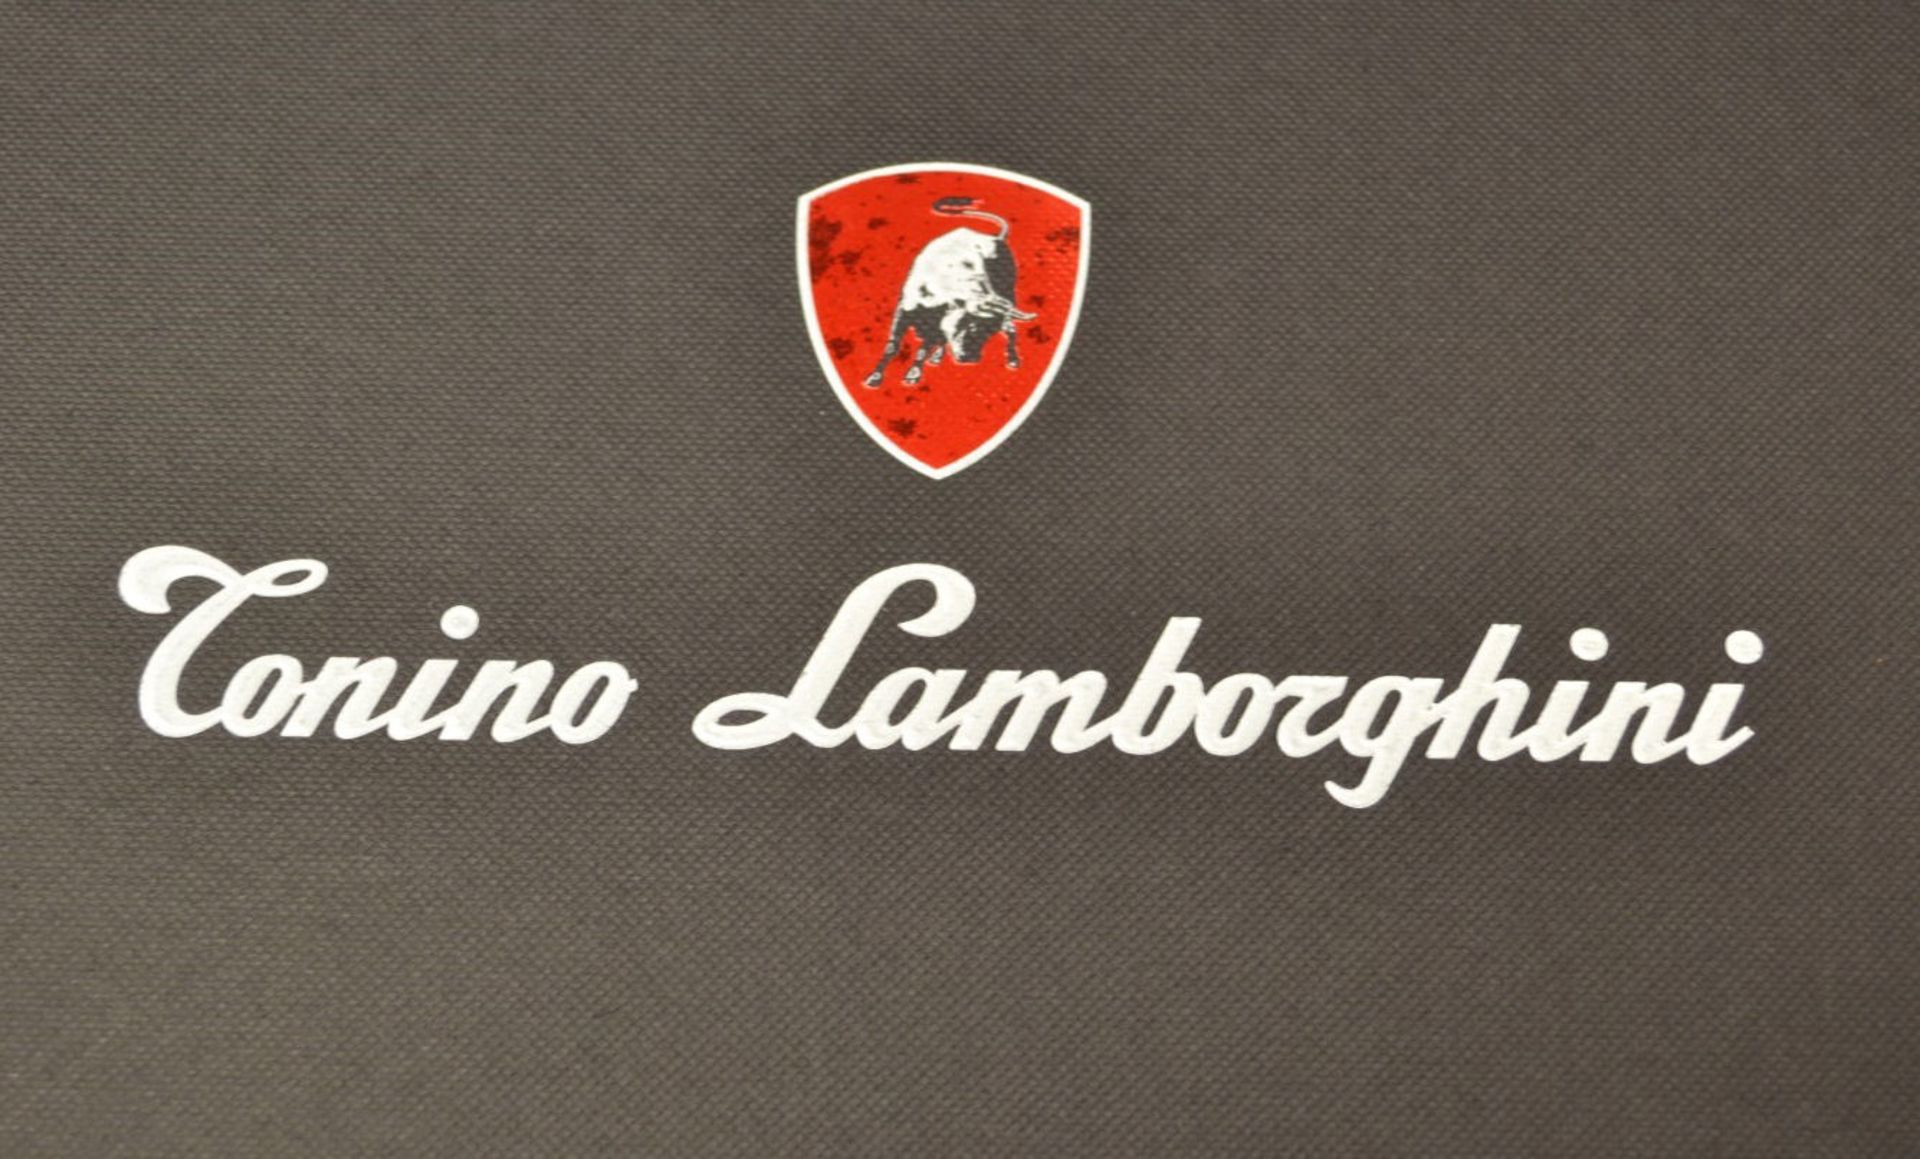 1 x Limited Edition Lamborghini "88 Tauri" Android Smart Phone - Orange - Original RRP £4500 - Image 5 of 27